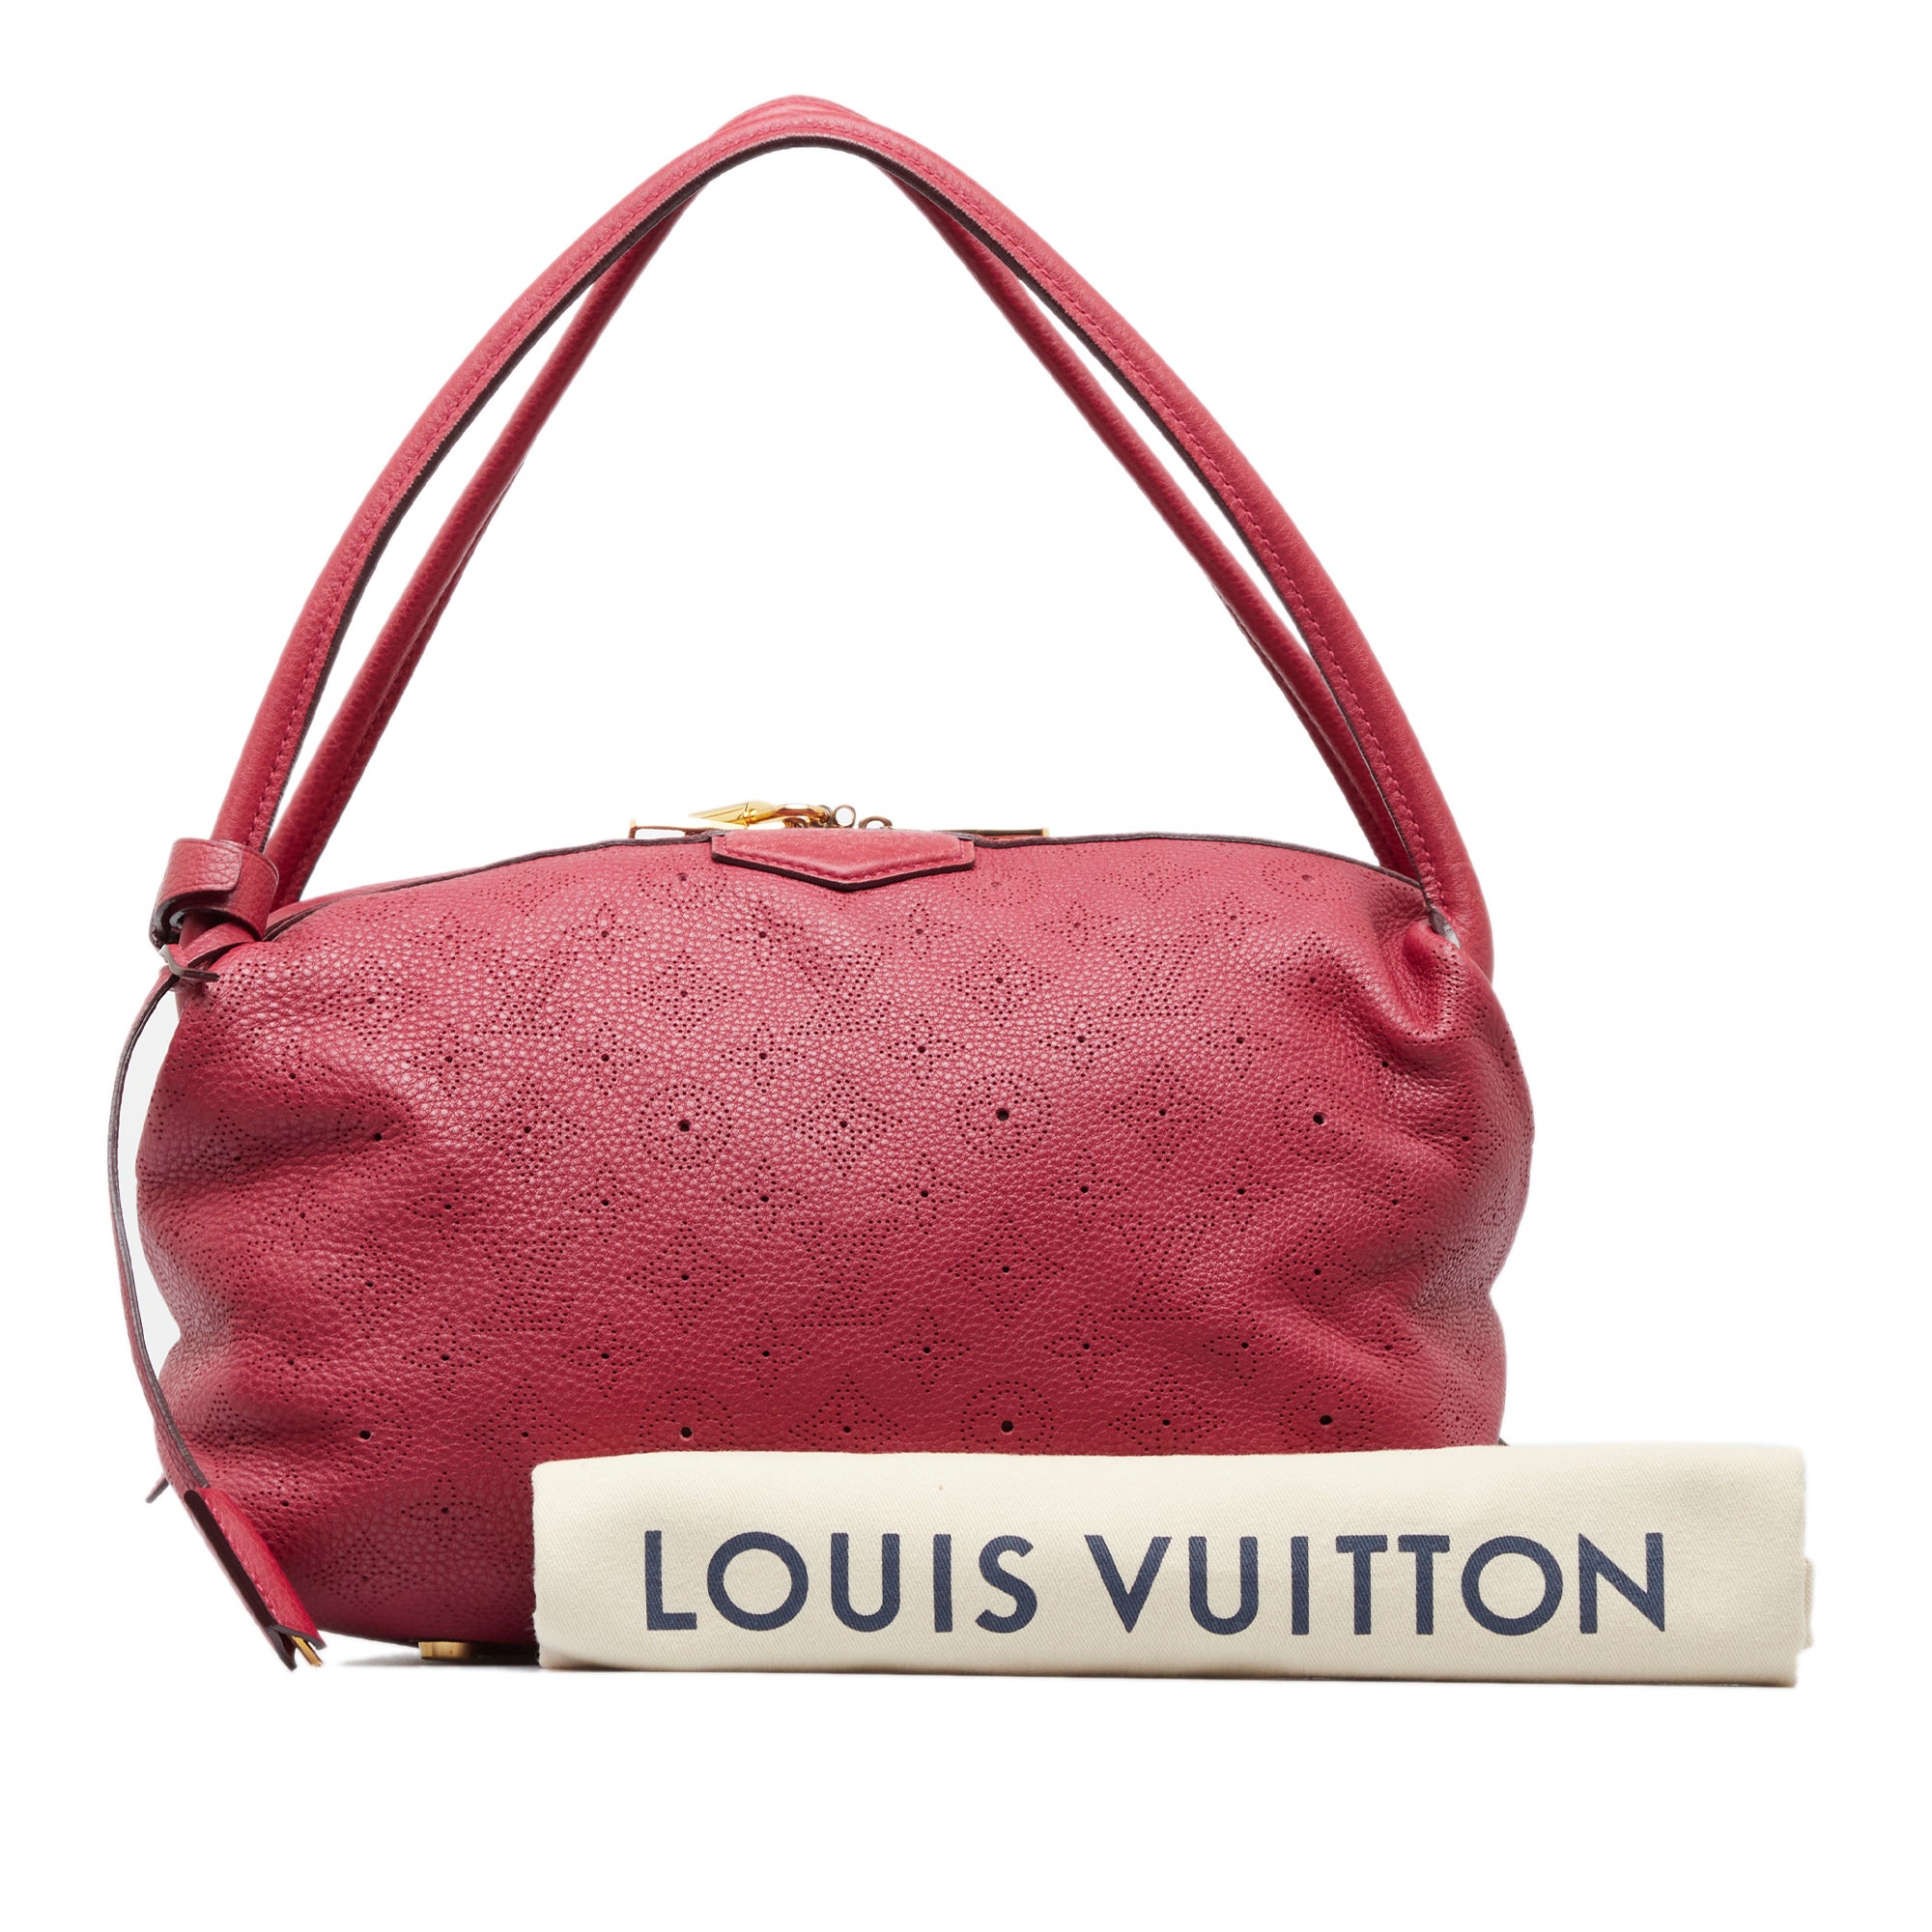 Louis Vuitton Mahina Monogram Leather Shoulder Bag on SALE